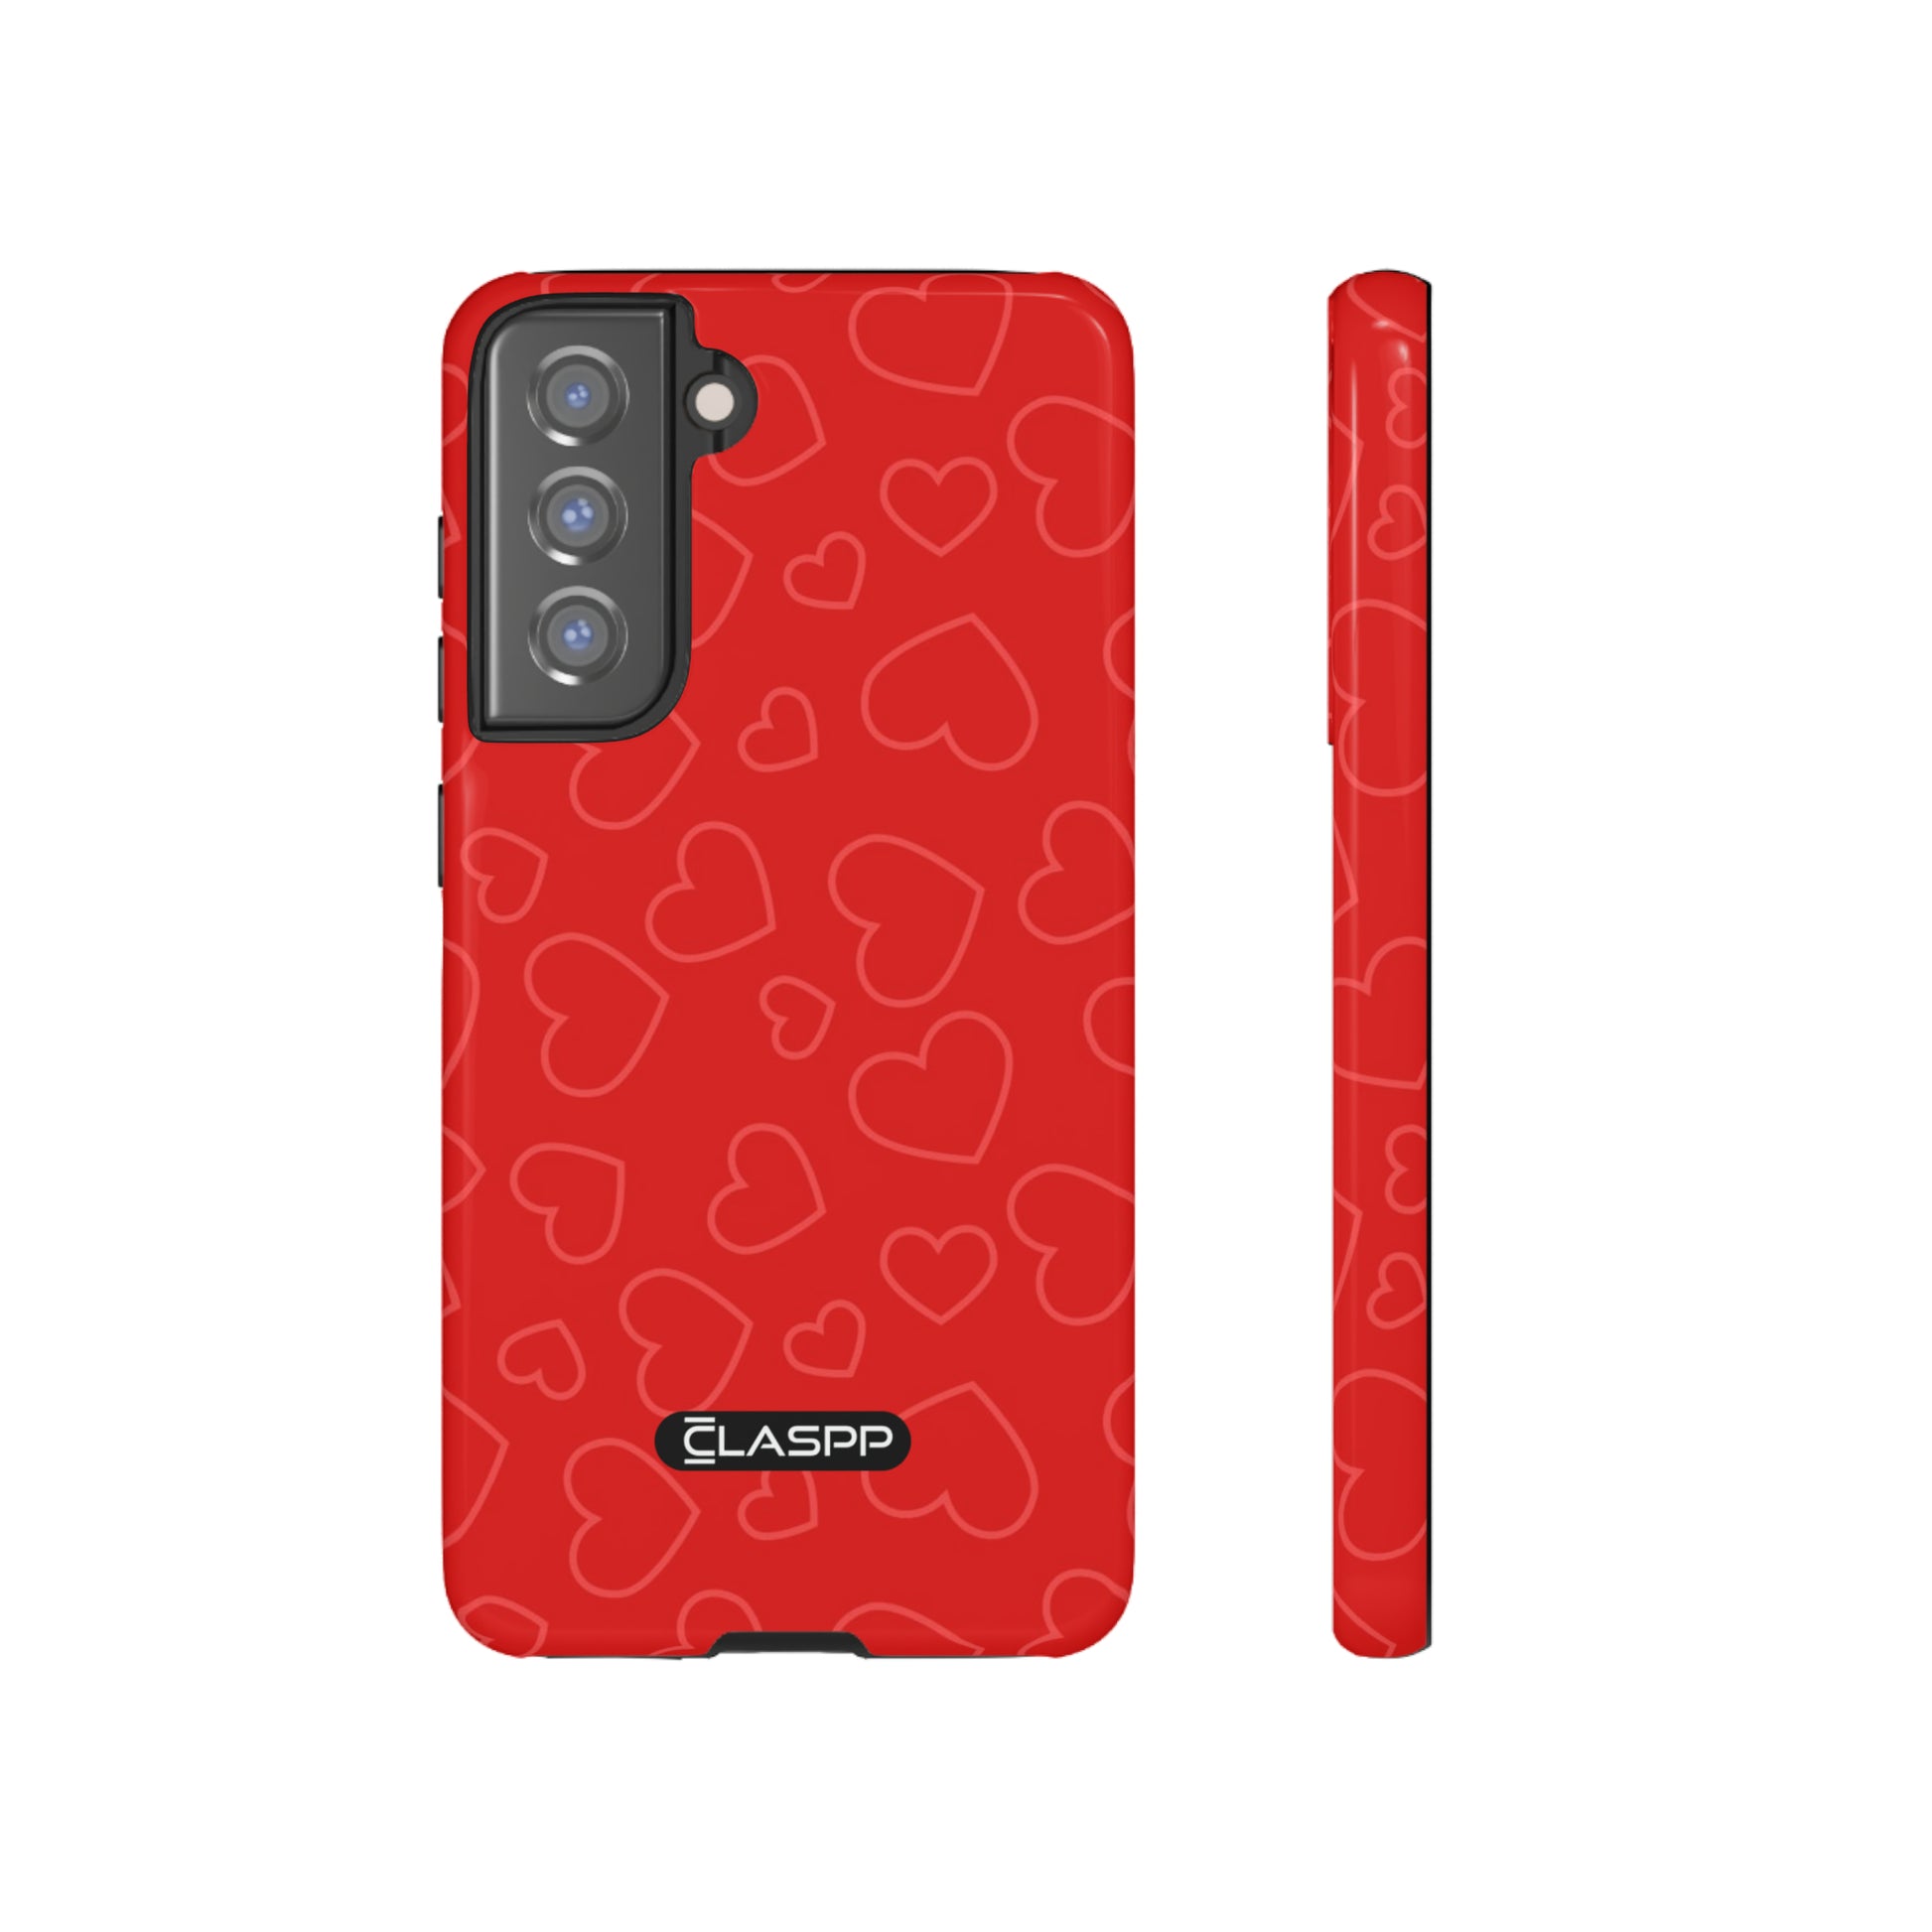 Samsung Galaxy S21 FE Amora Valentine's Day phone case